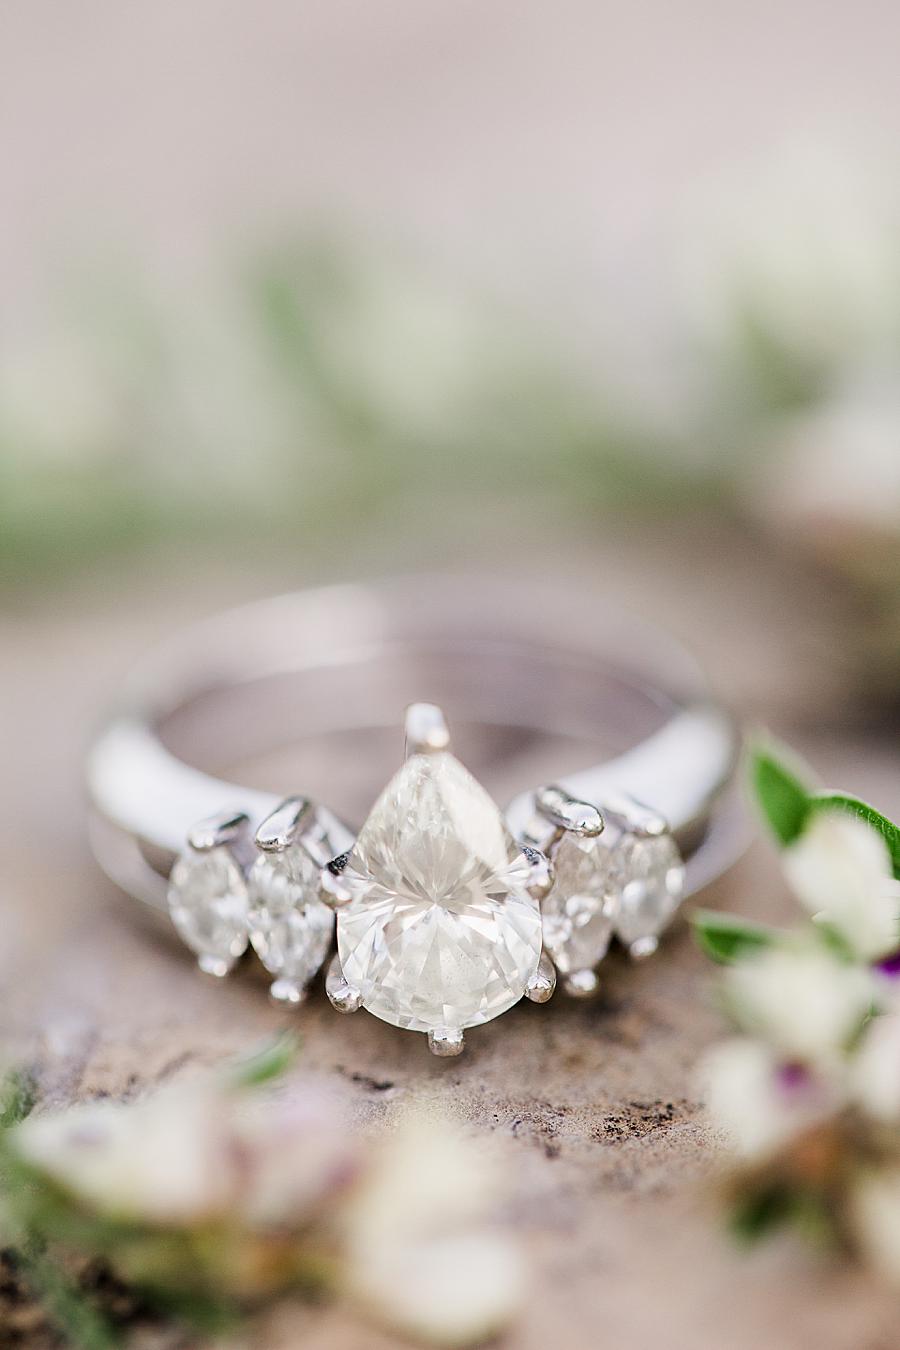 Diamond by Knoxville Wedding Photographer, Amanda May Photos.